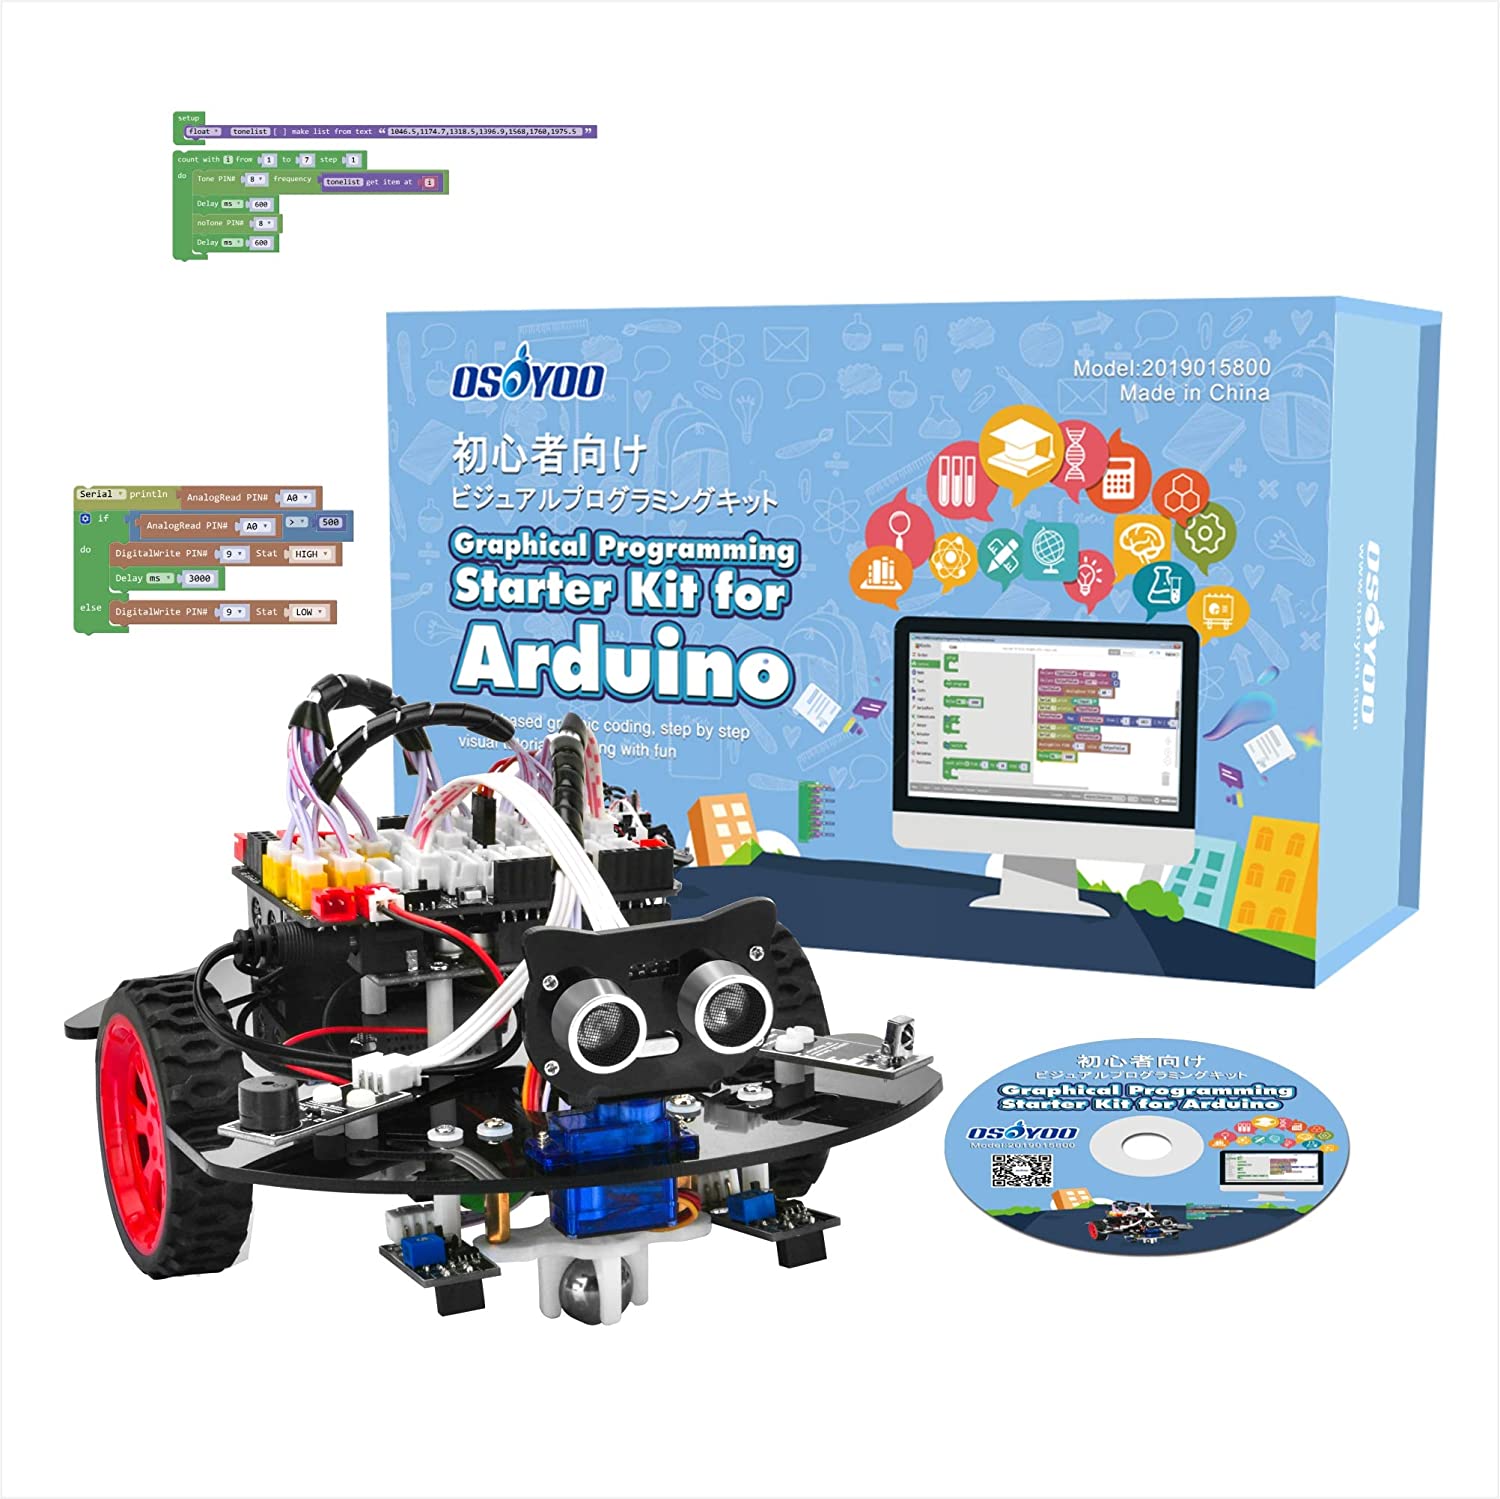 mBlock Graphical Programming Kit for Arduino (Model:2019015800)